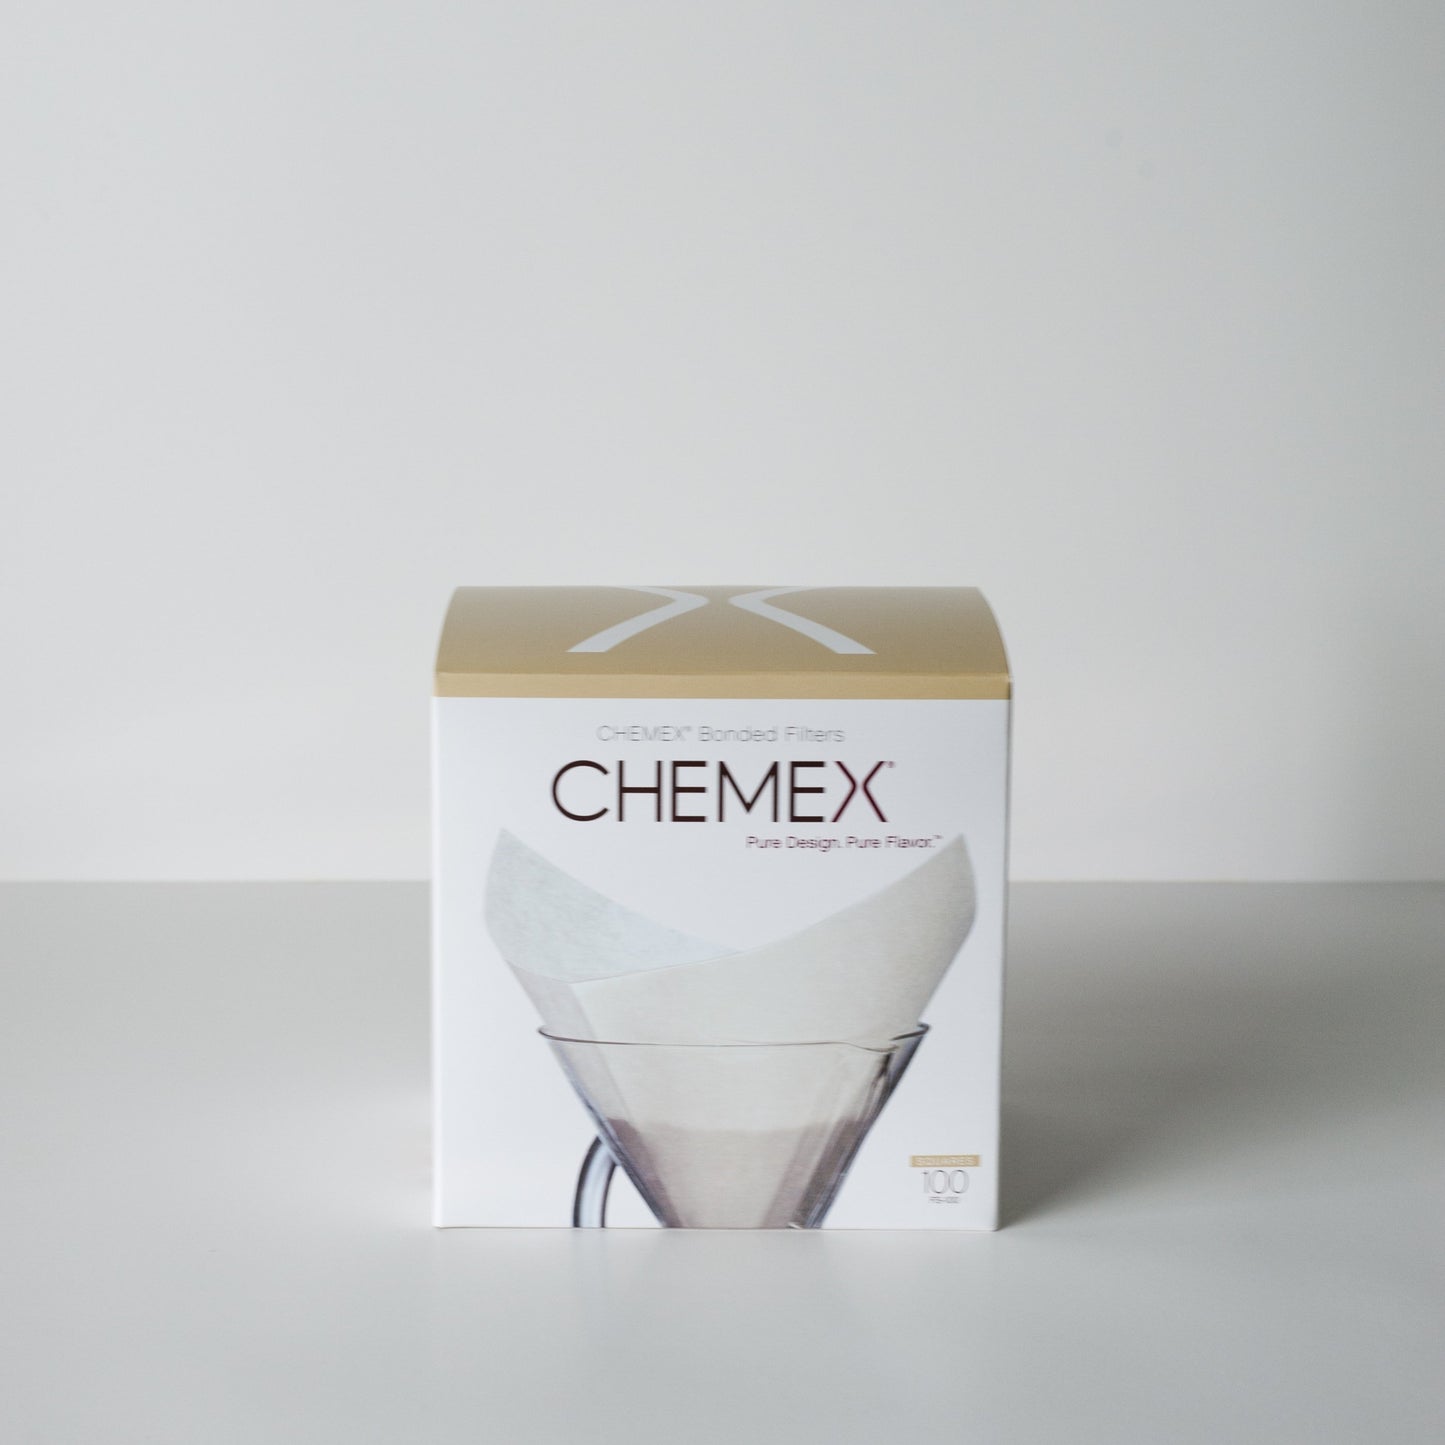 CHEMEX Bonded Filters